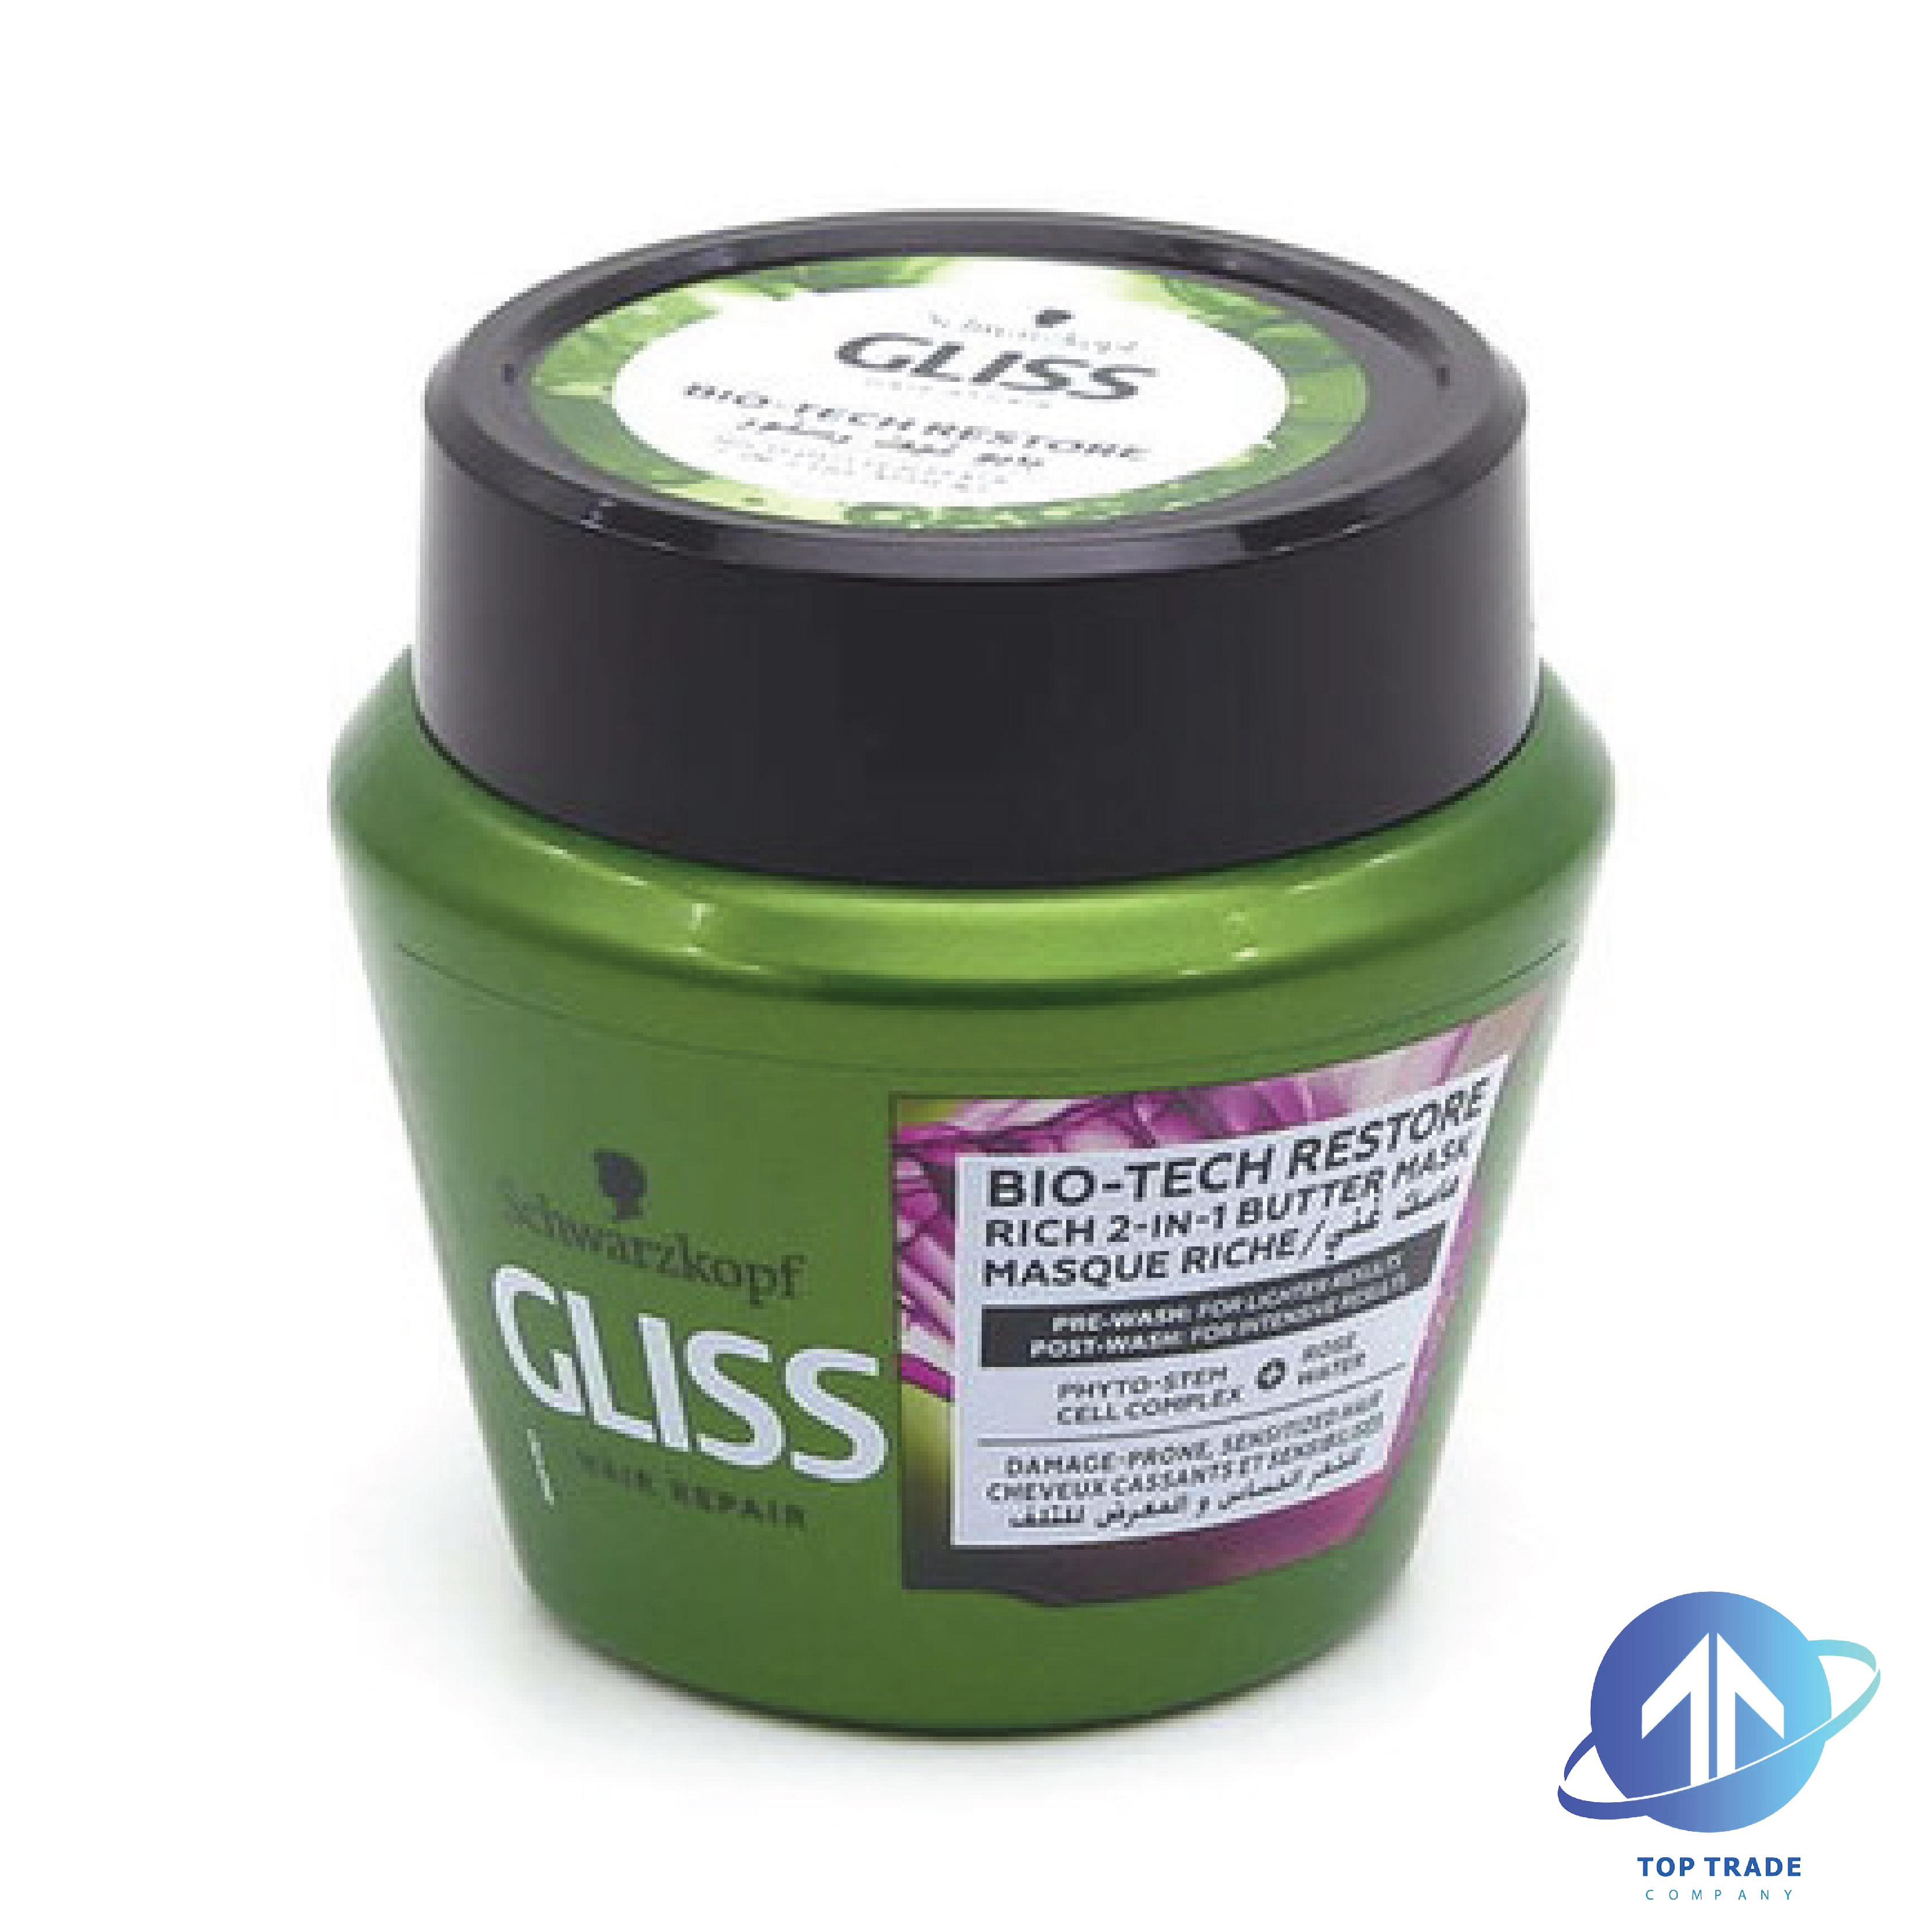 Gliss nourishing hair mask Bio-Tech Restore 300ml